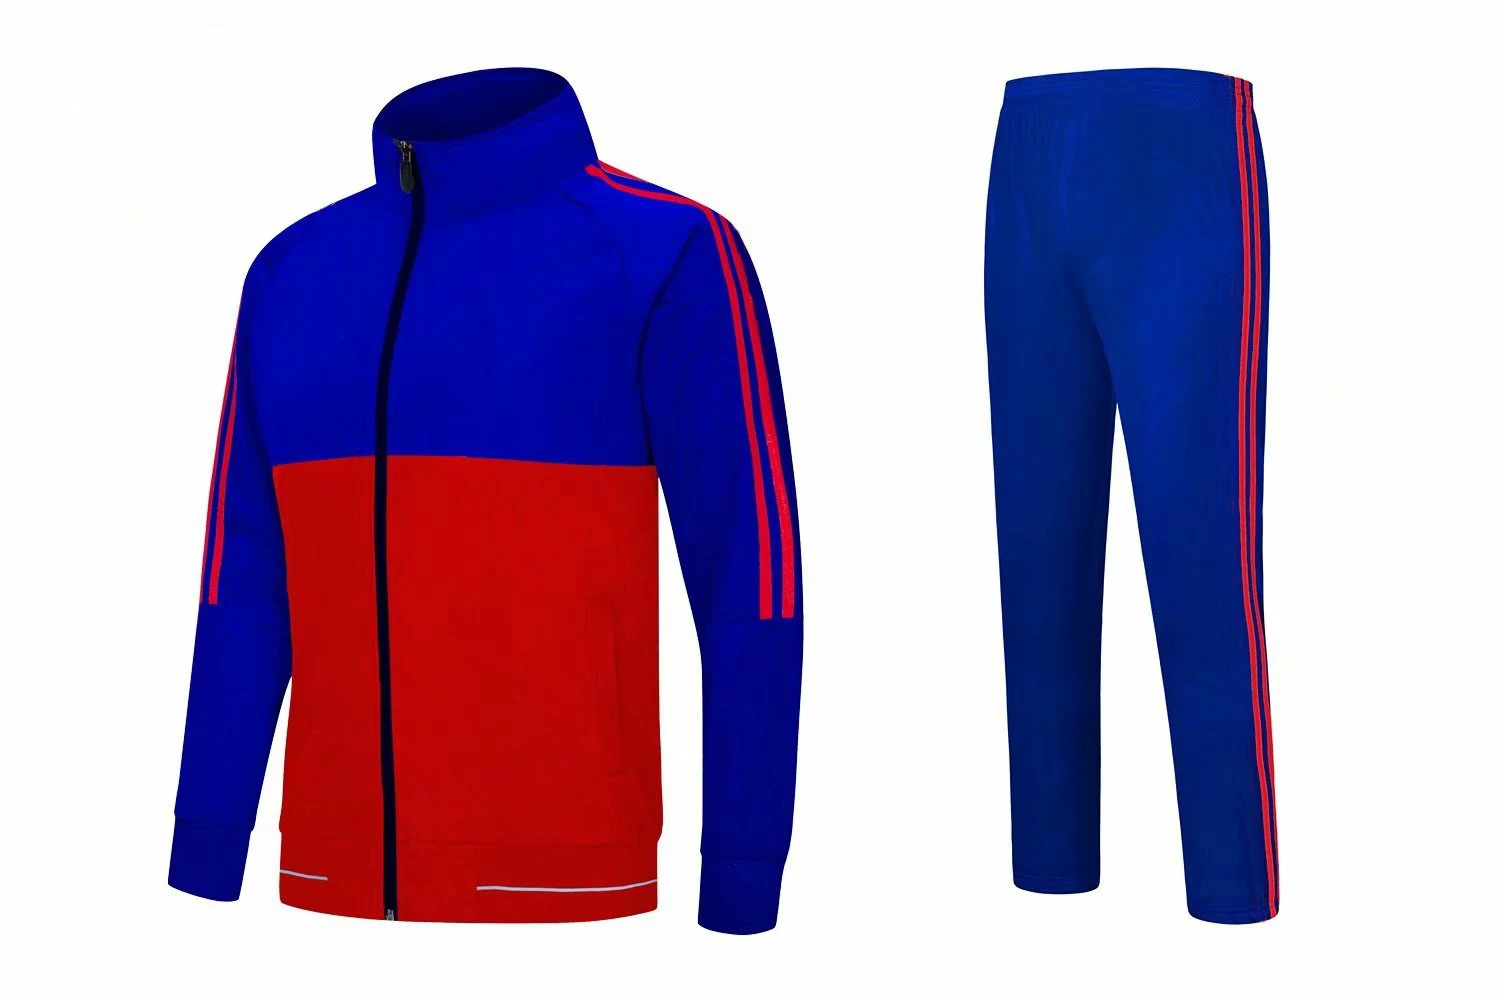 Oem Design Factory Wholesale Blank Print Track Jacket Sports Wear ...